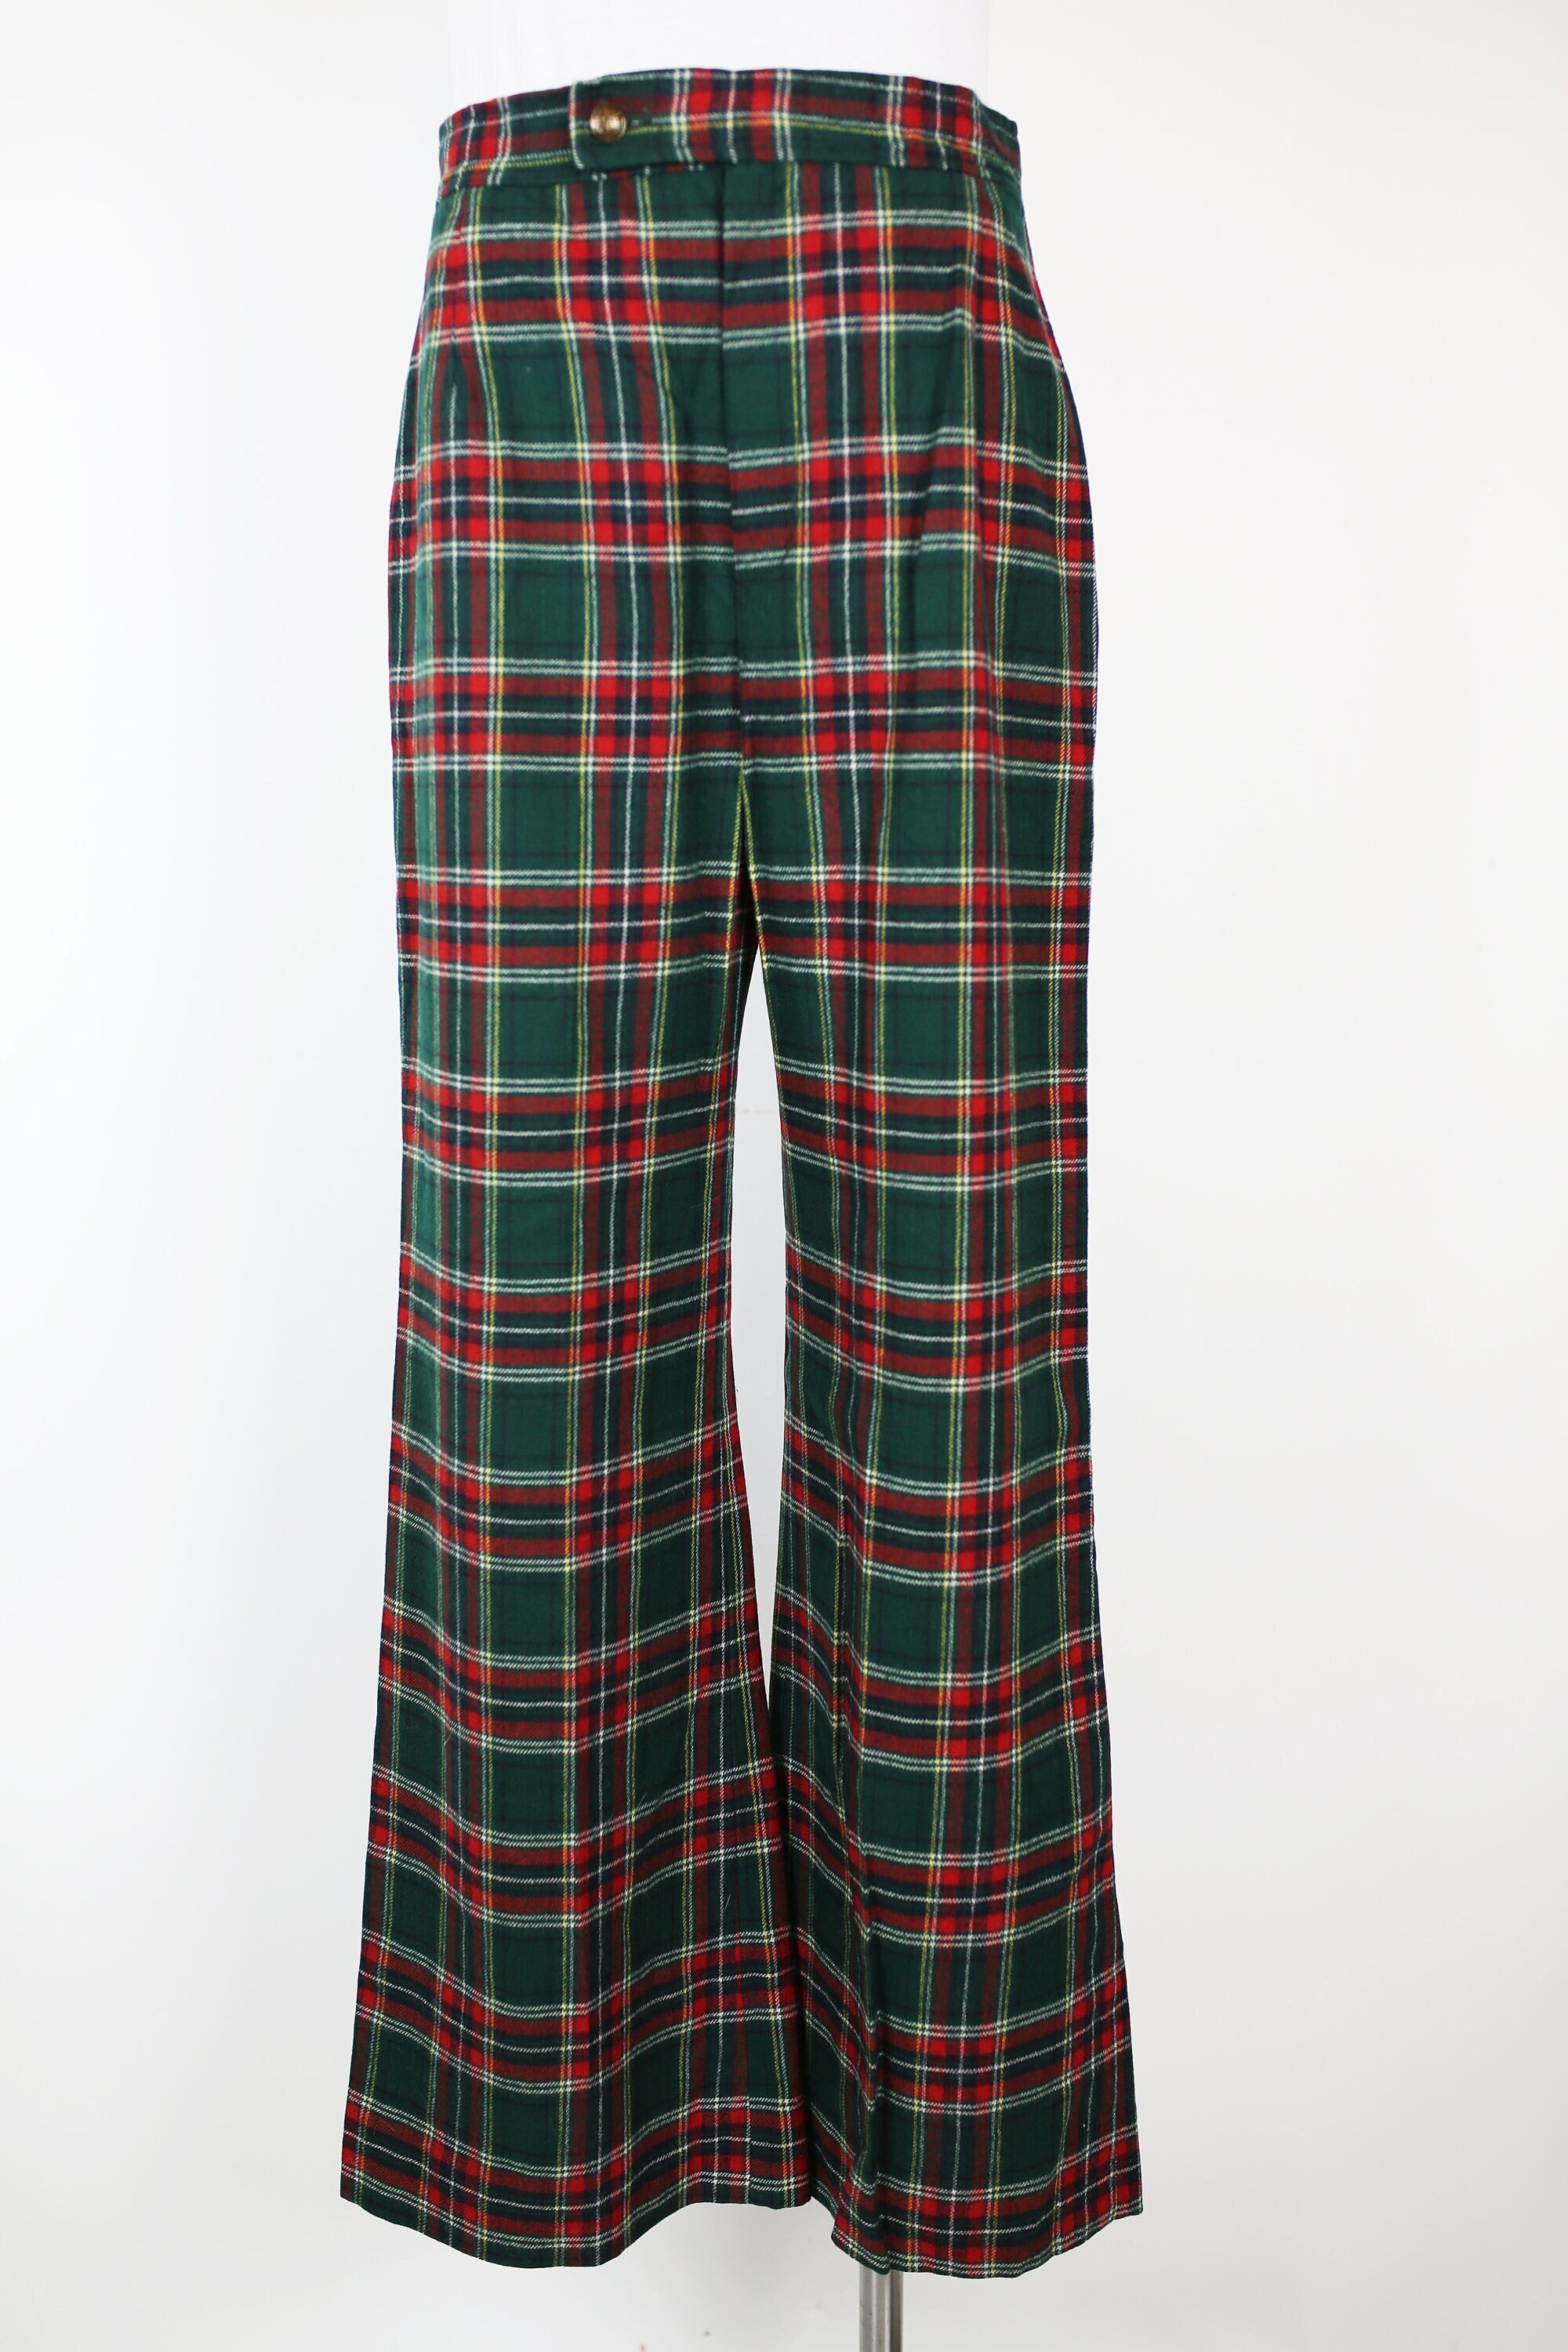 Flare High rise crisp leg seam 70's wool blend dark burgundy trousers HOT fully lined!